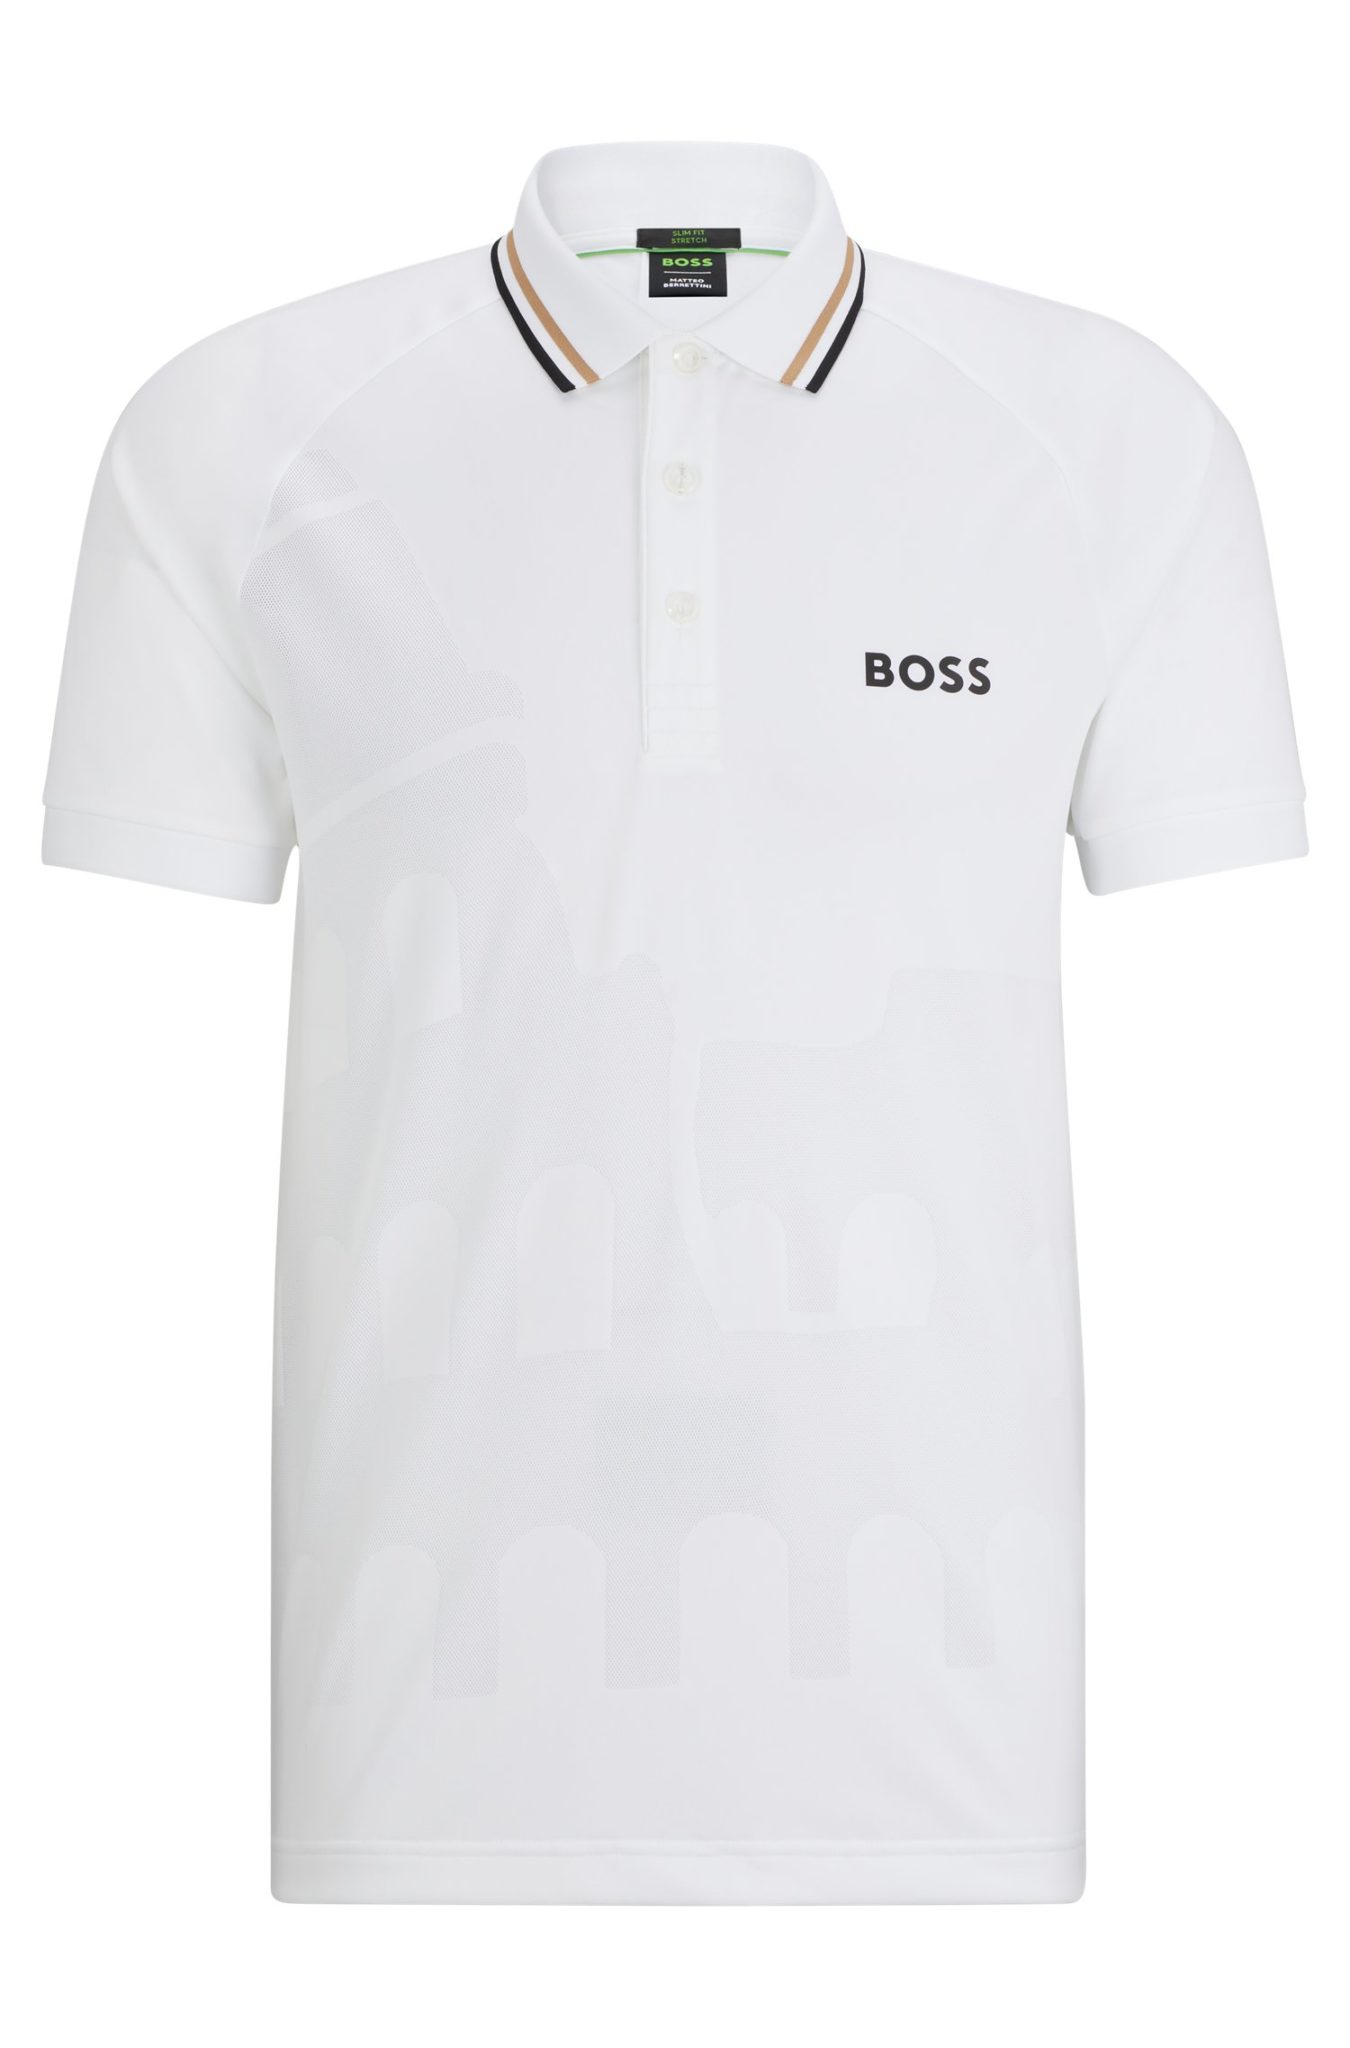 Hugo Boss Polo Slim Fit en jersey jacquard technique BOSS x Matteo Berrettini